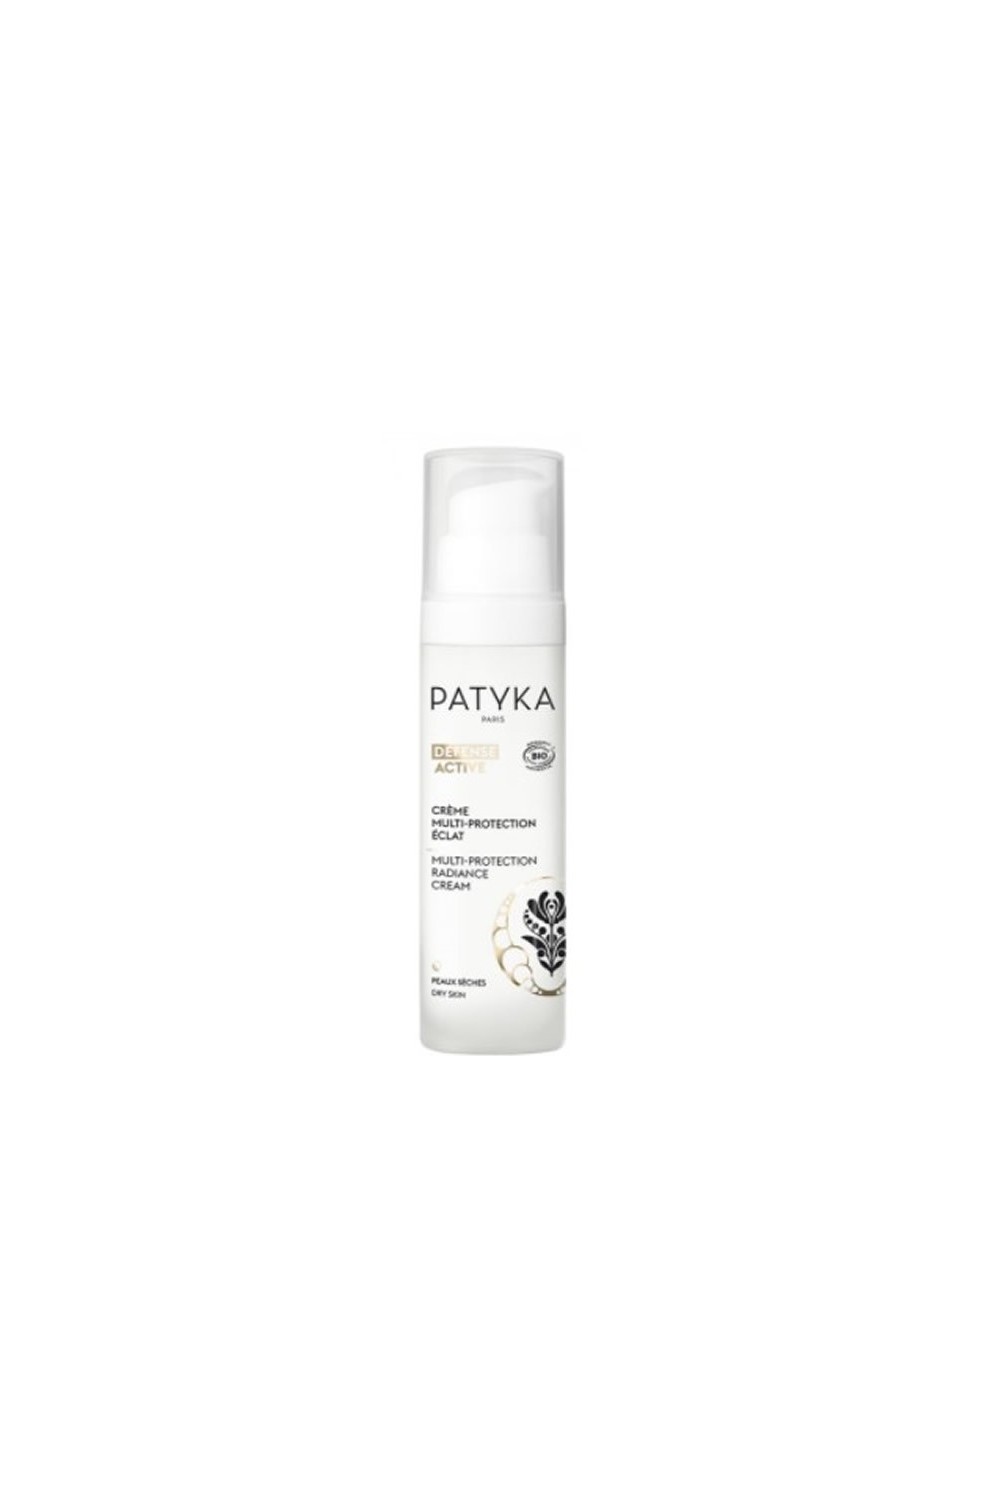 Patyka Multi-Protection Radiance Cream 50ml